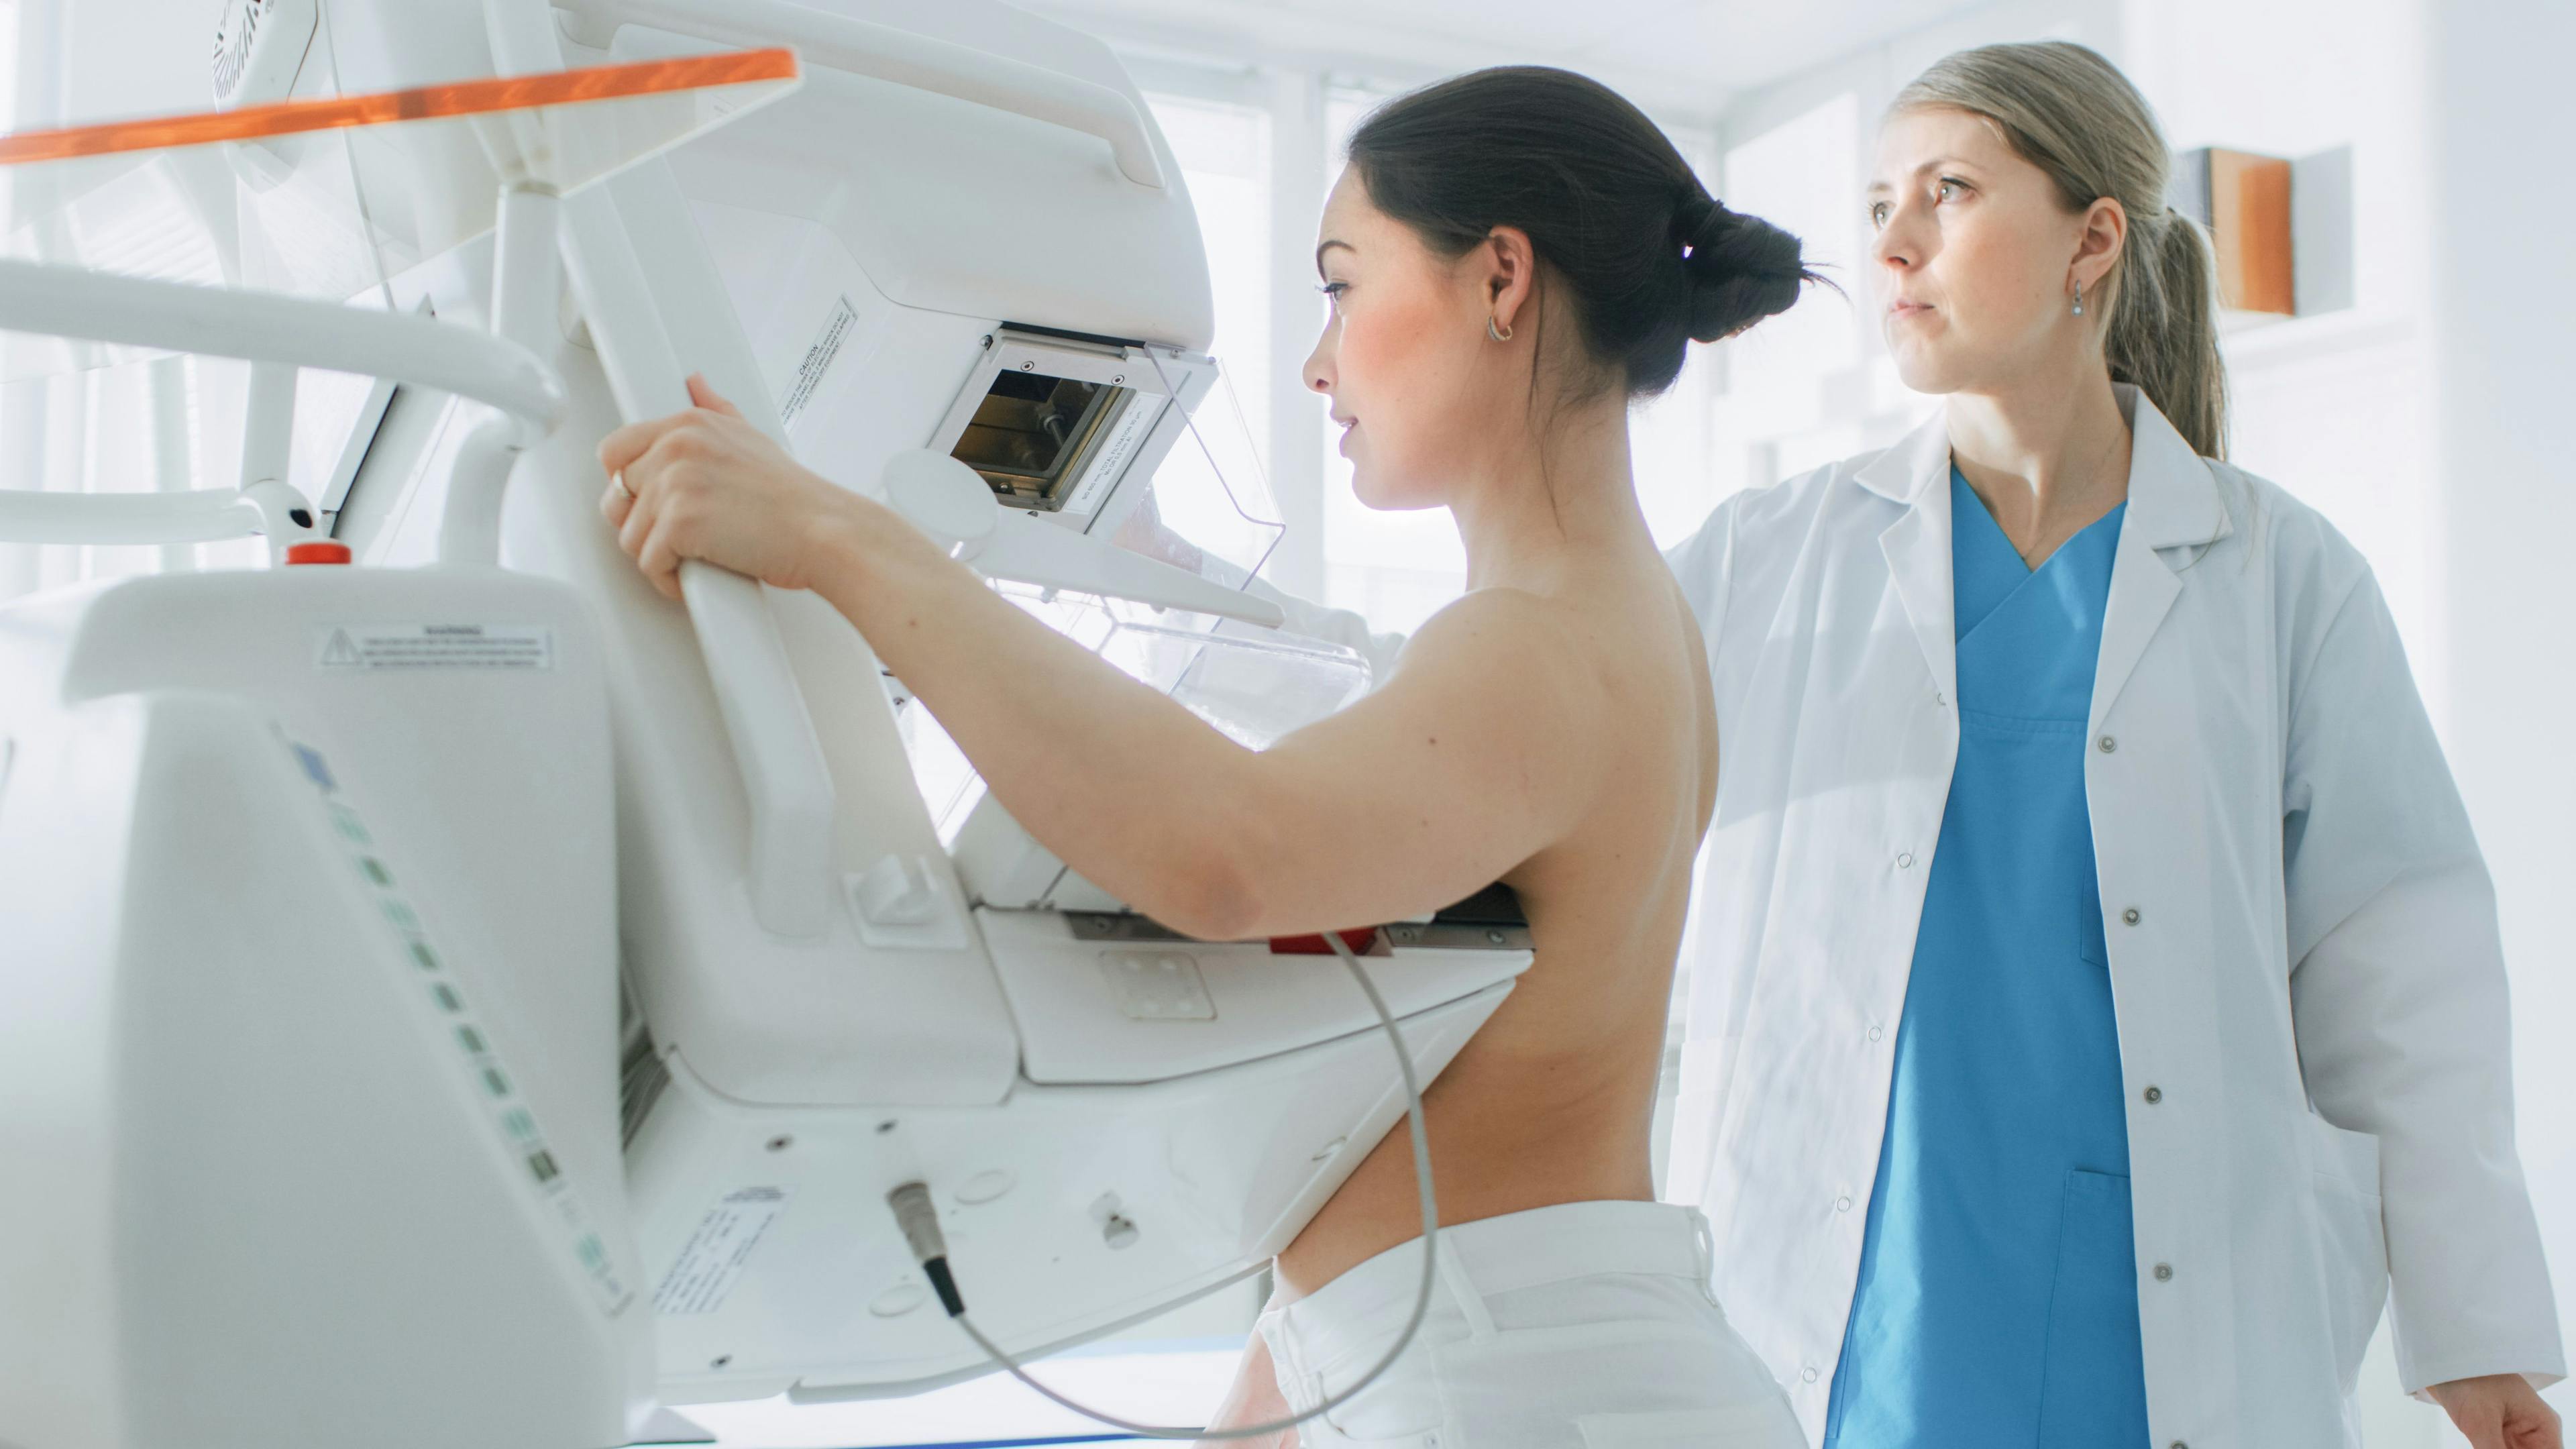 Screening mammography: Is 3D better?